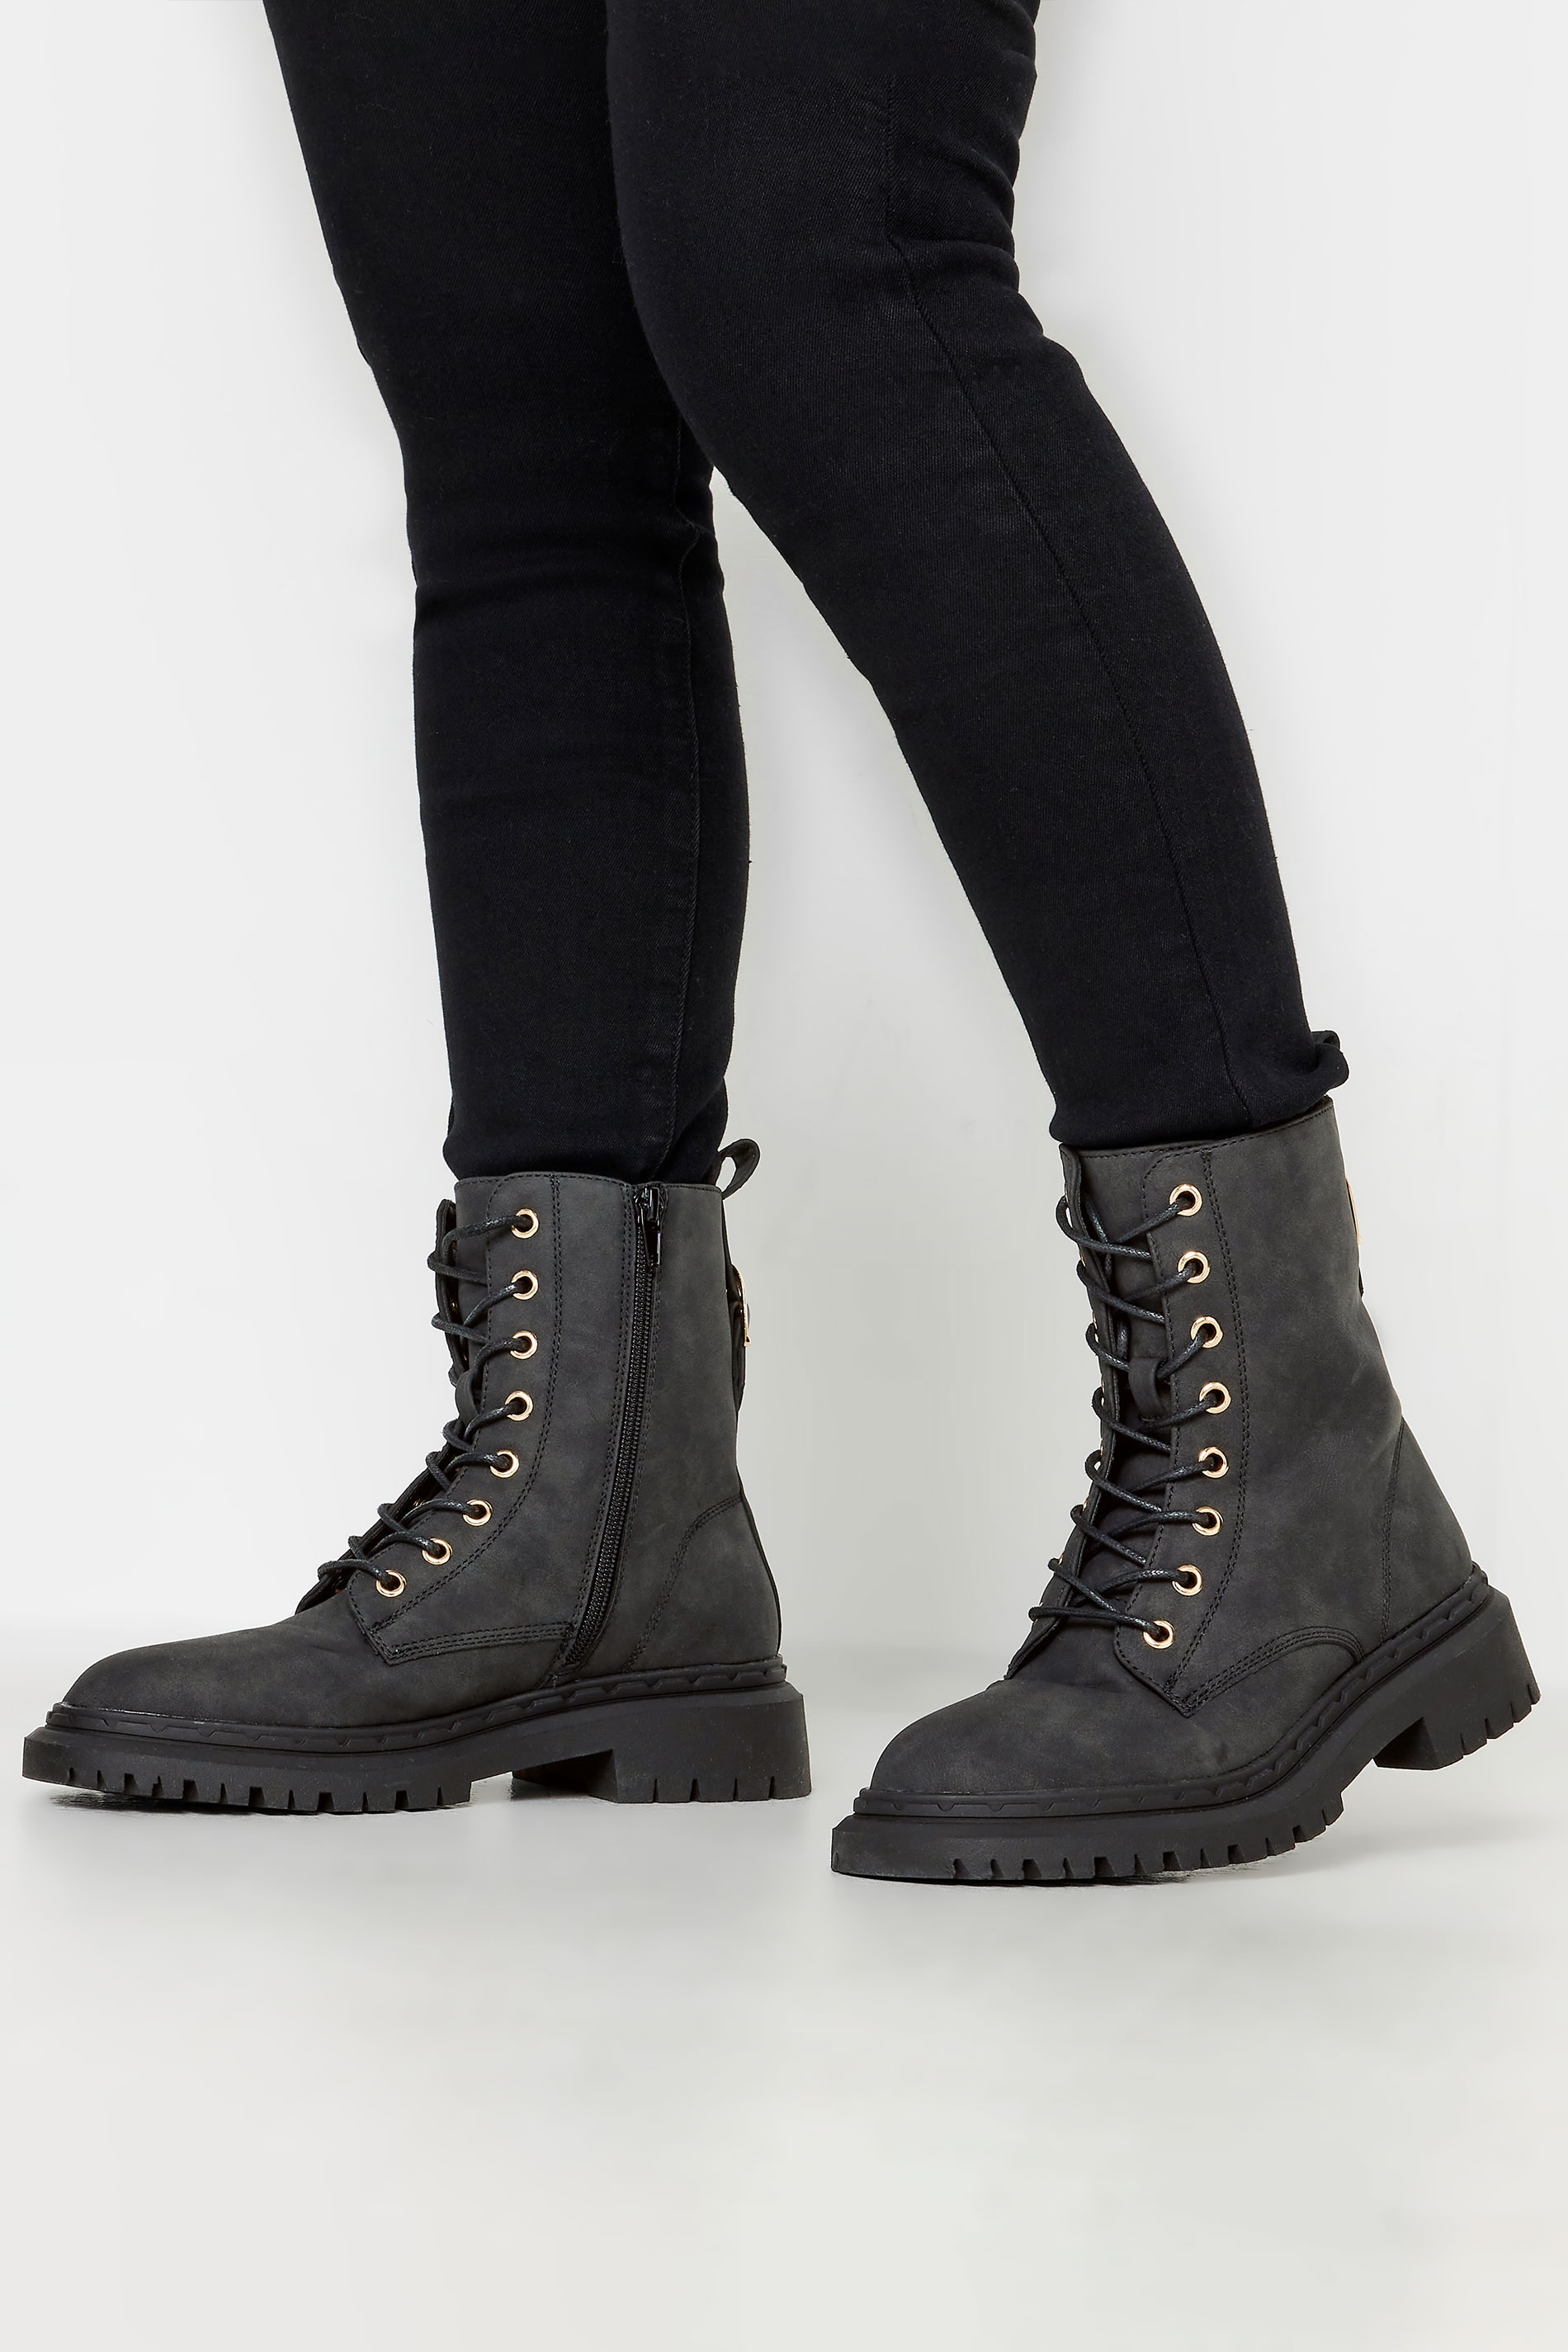 PixieGirl Black Chunky Lace Up Boots In Standard Fit | PixieGirl